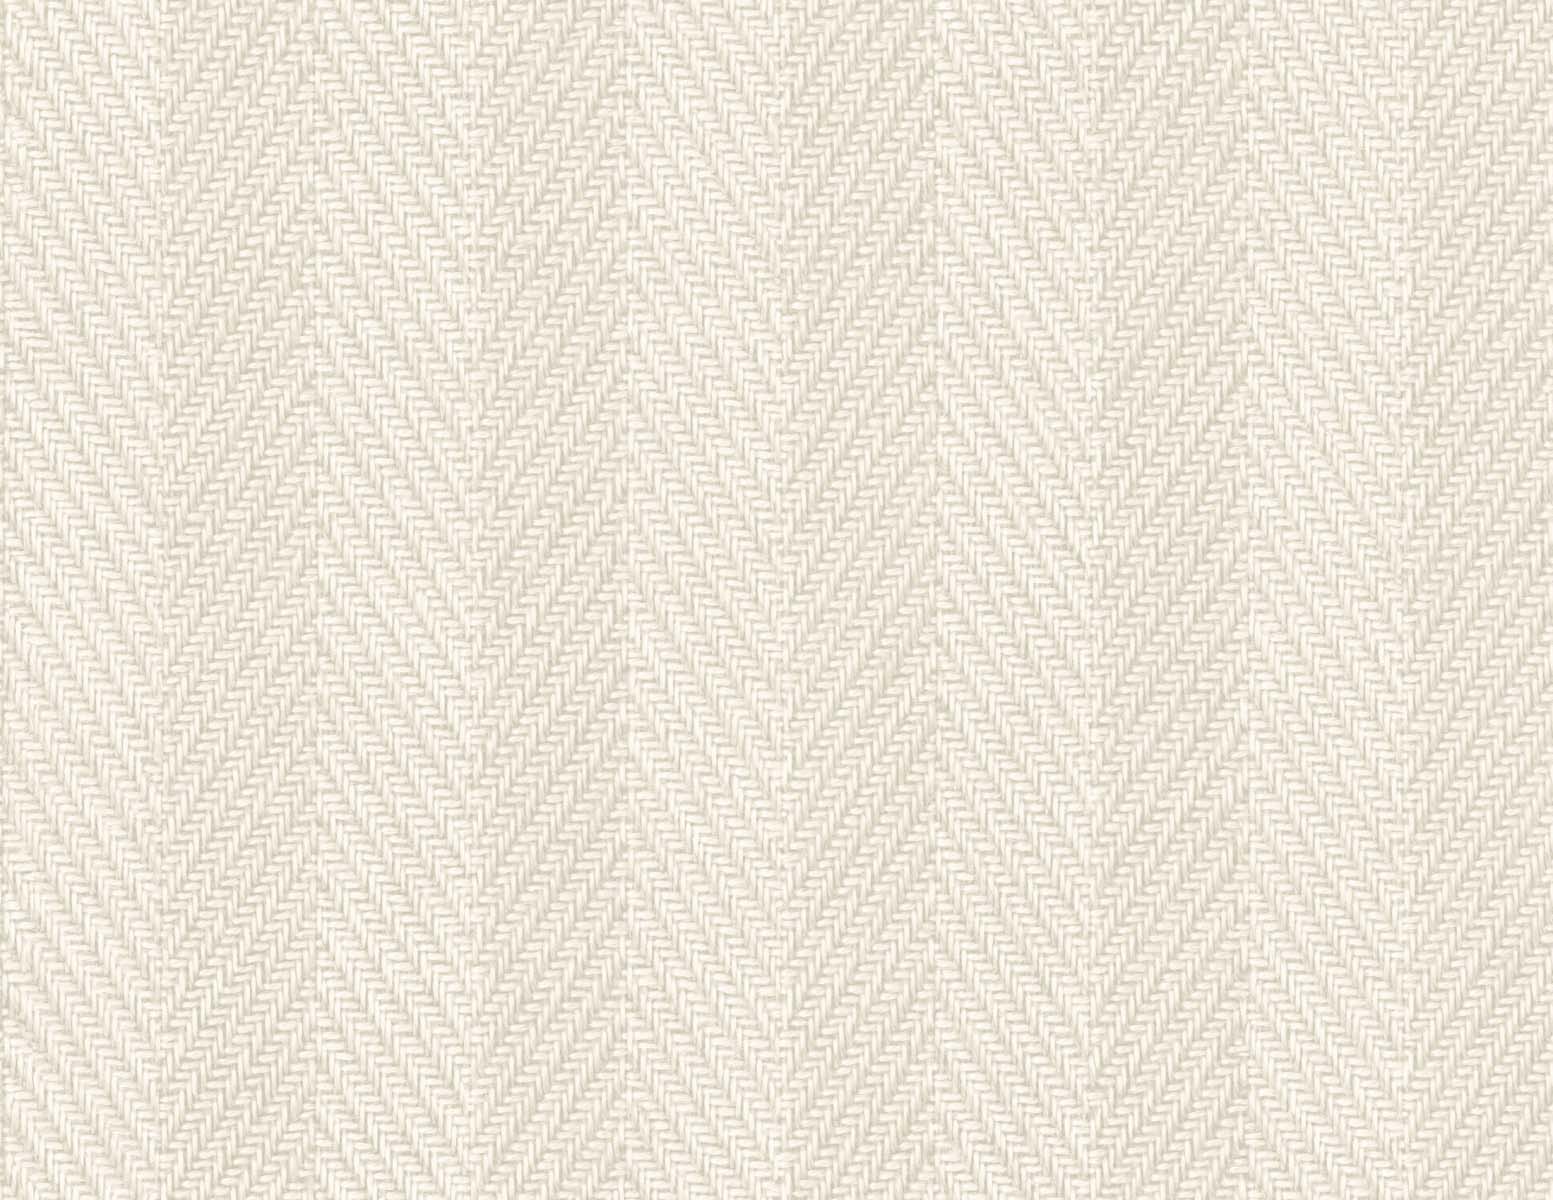 DuPont TG60205 Tedlar Textures Throw Knit Embossed Vinyl  Wallpaper Almond Cream